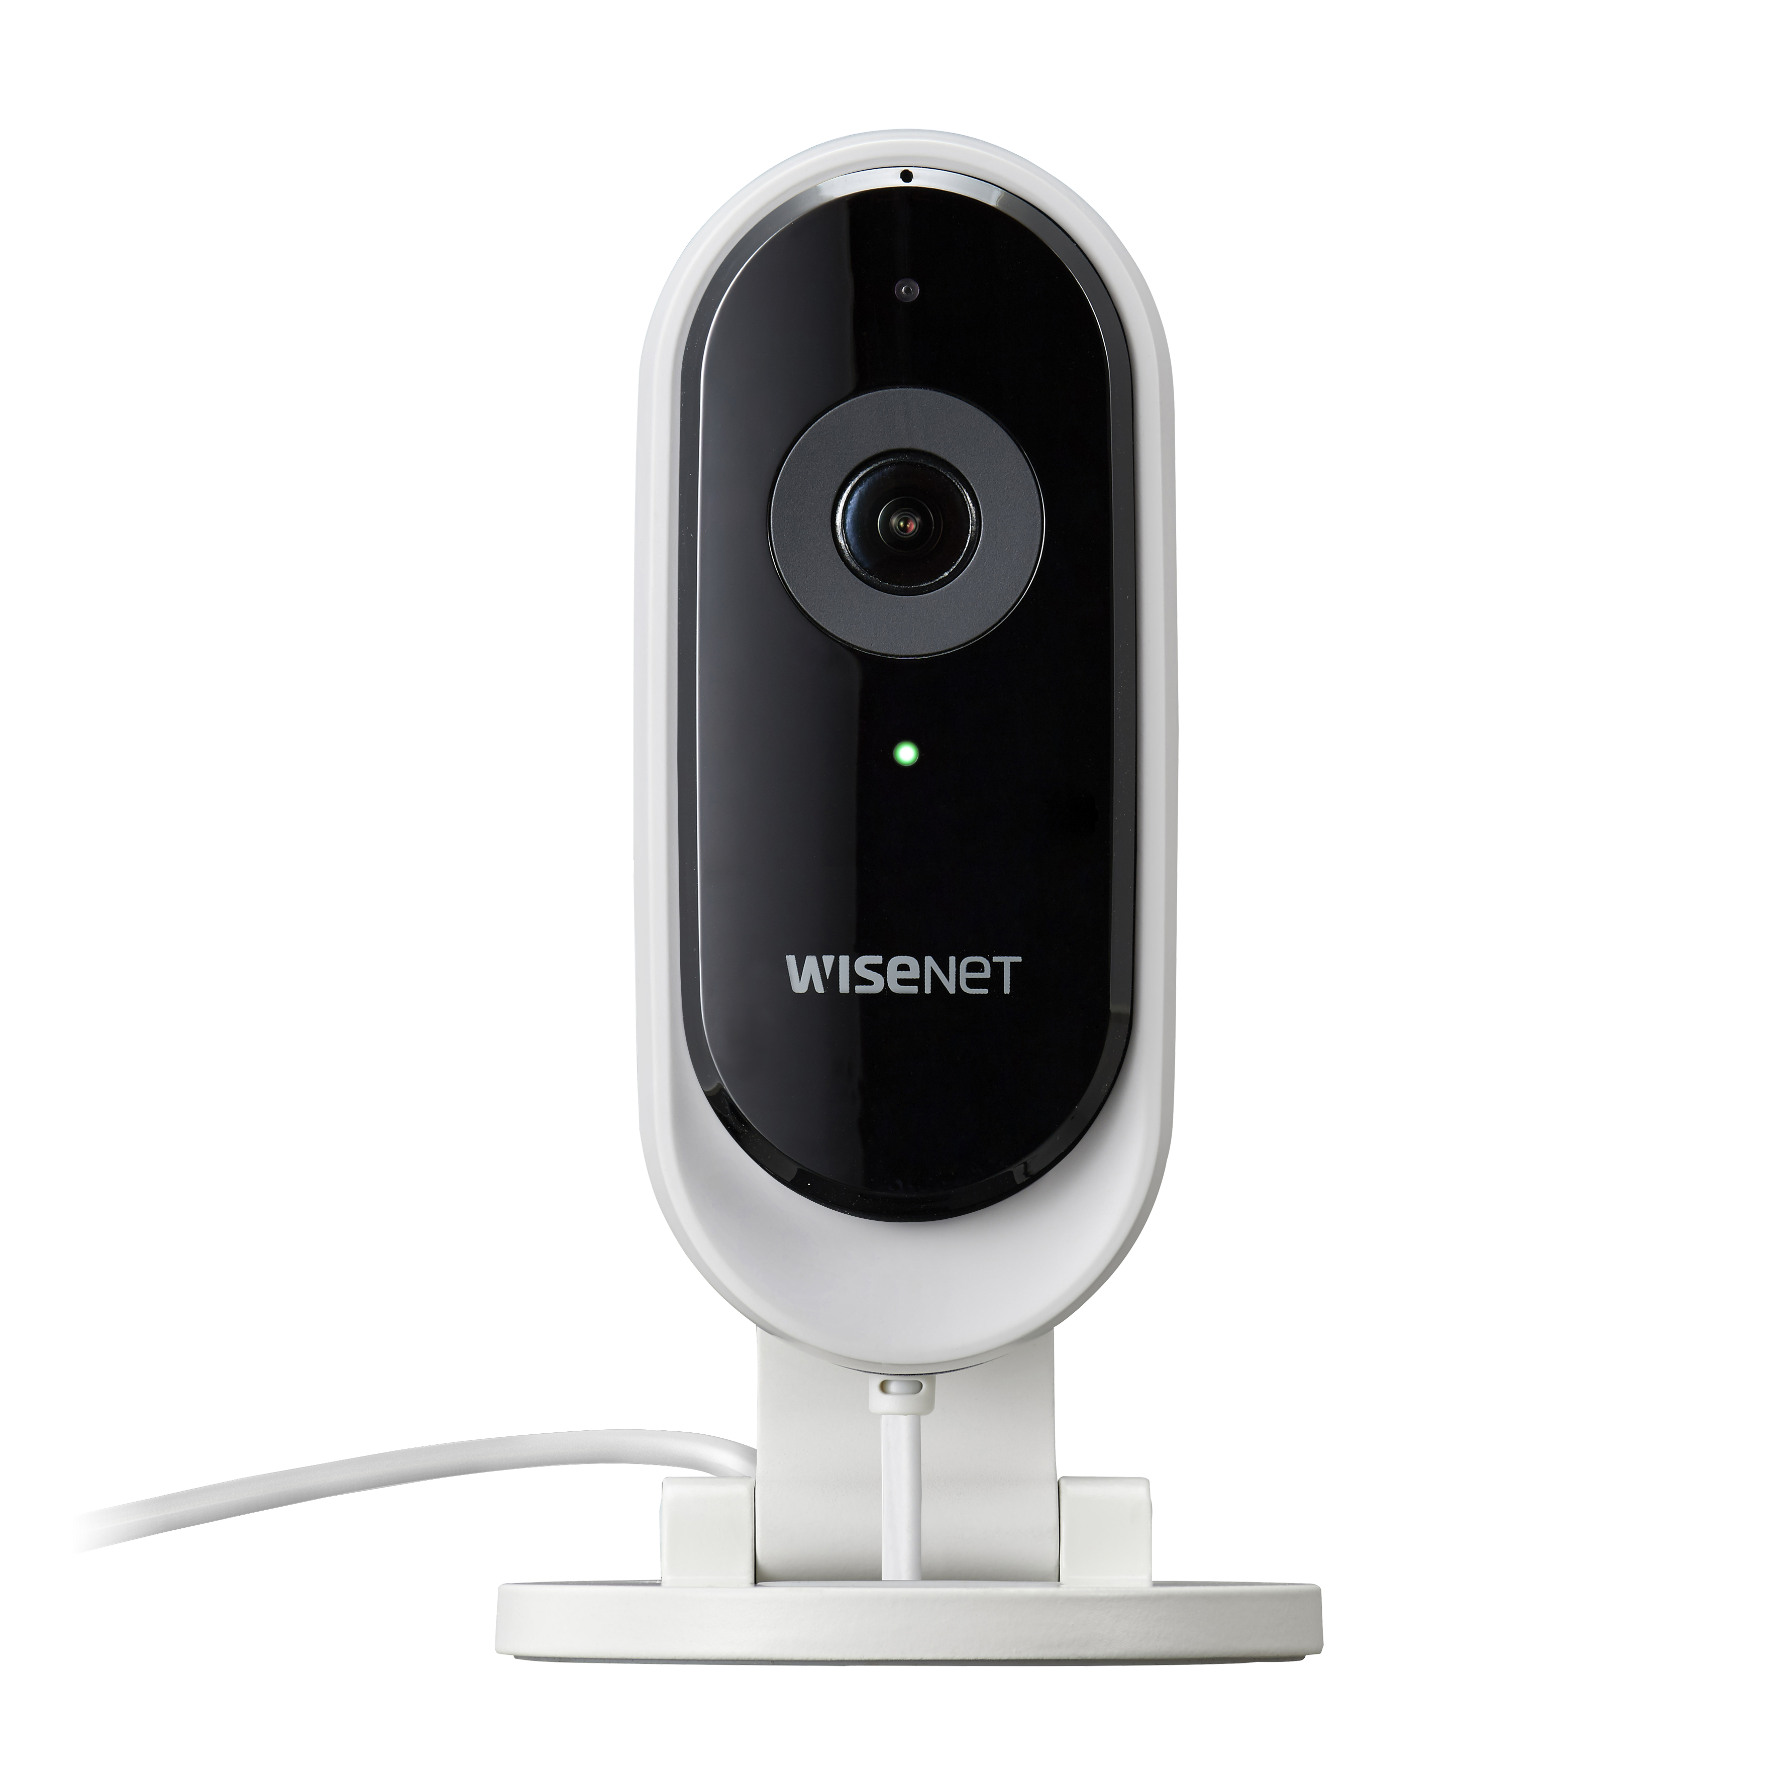 samsung wisenet smartcam troubleshooting